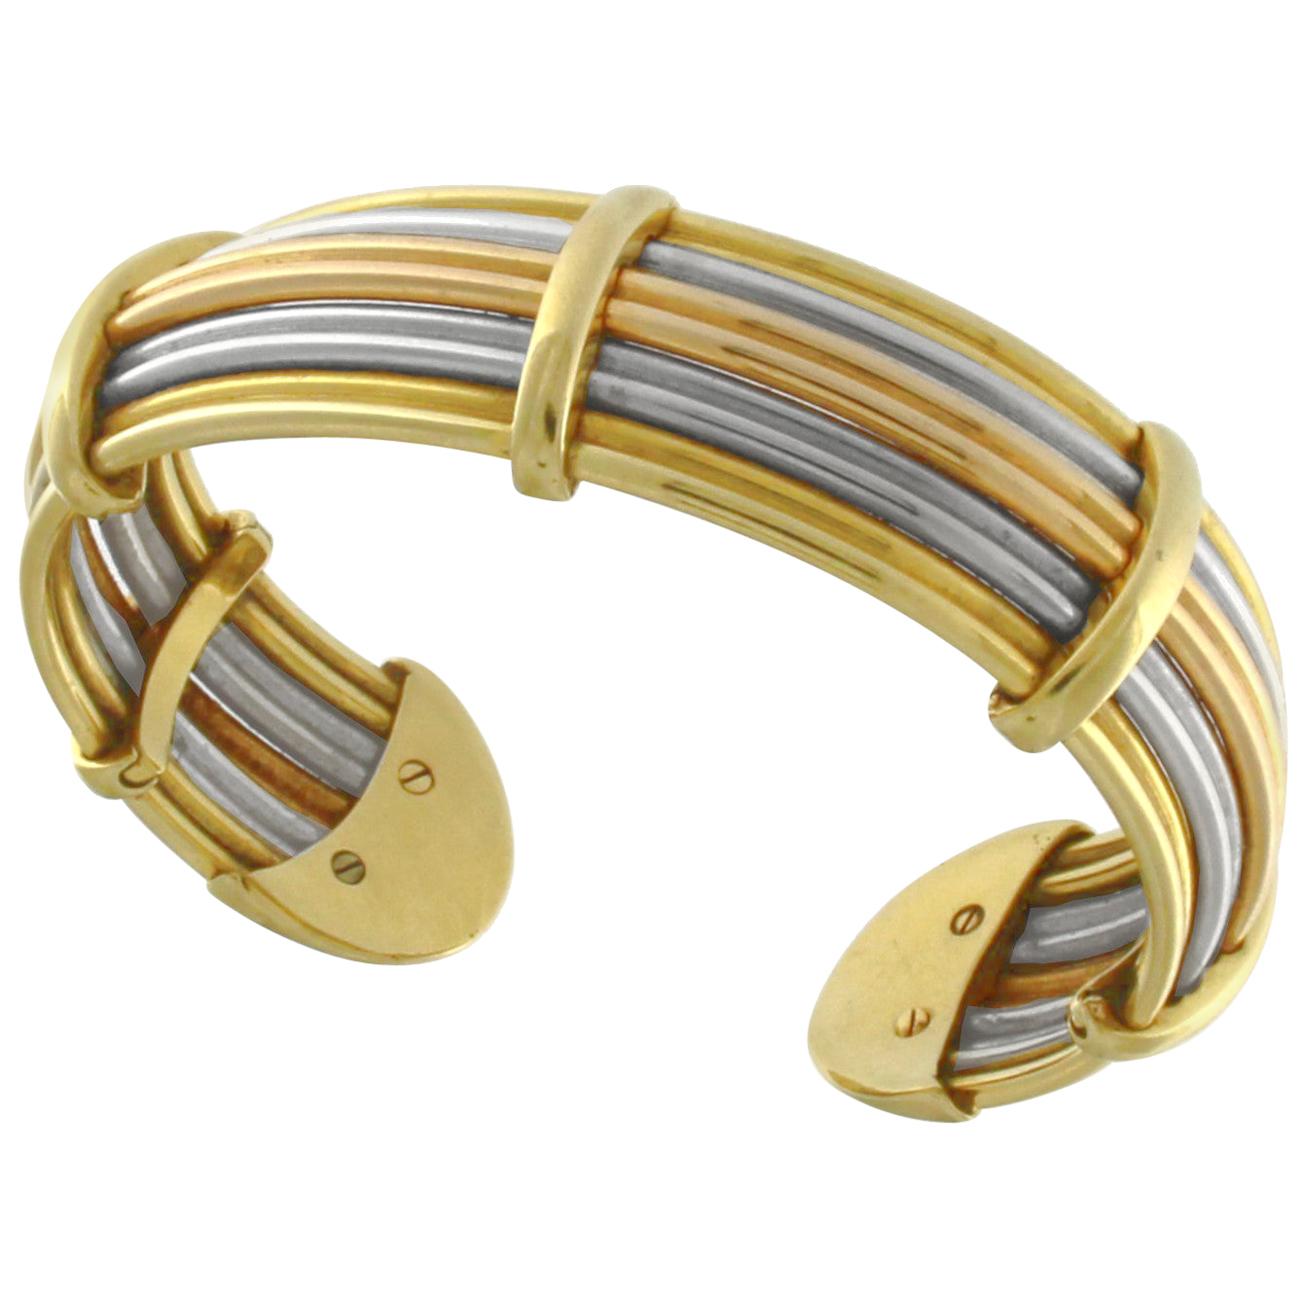 Flexible Cuff Bracelet in Three-Color Gold